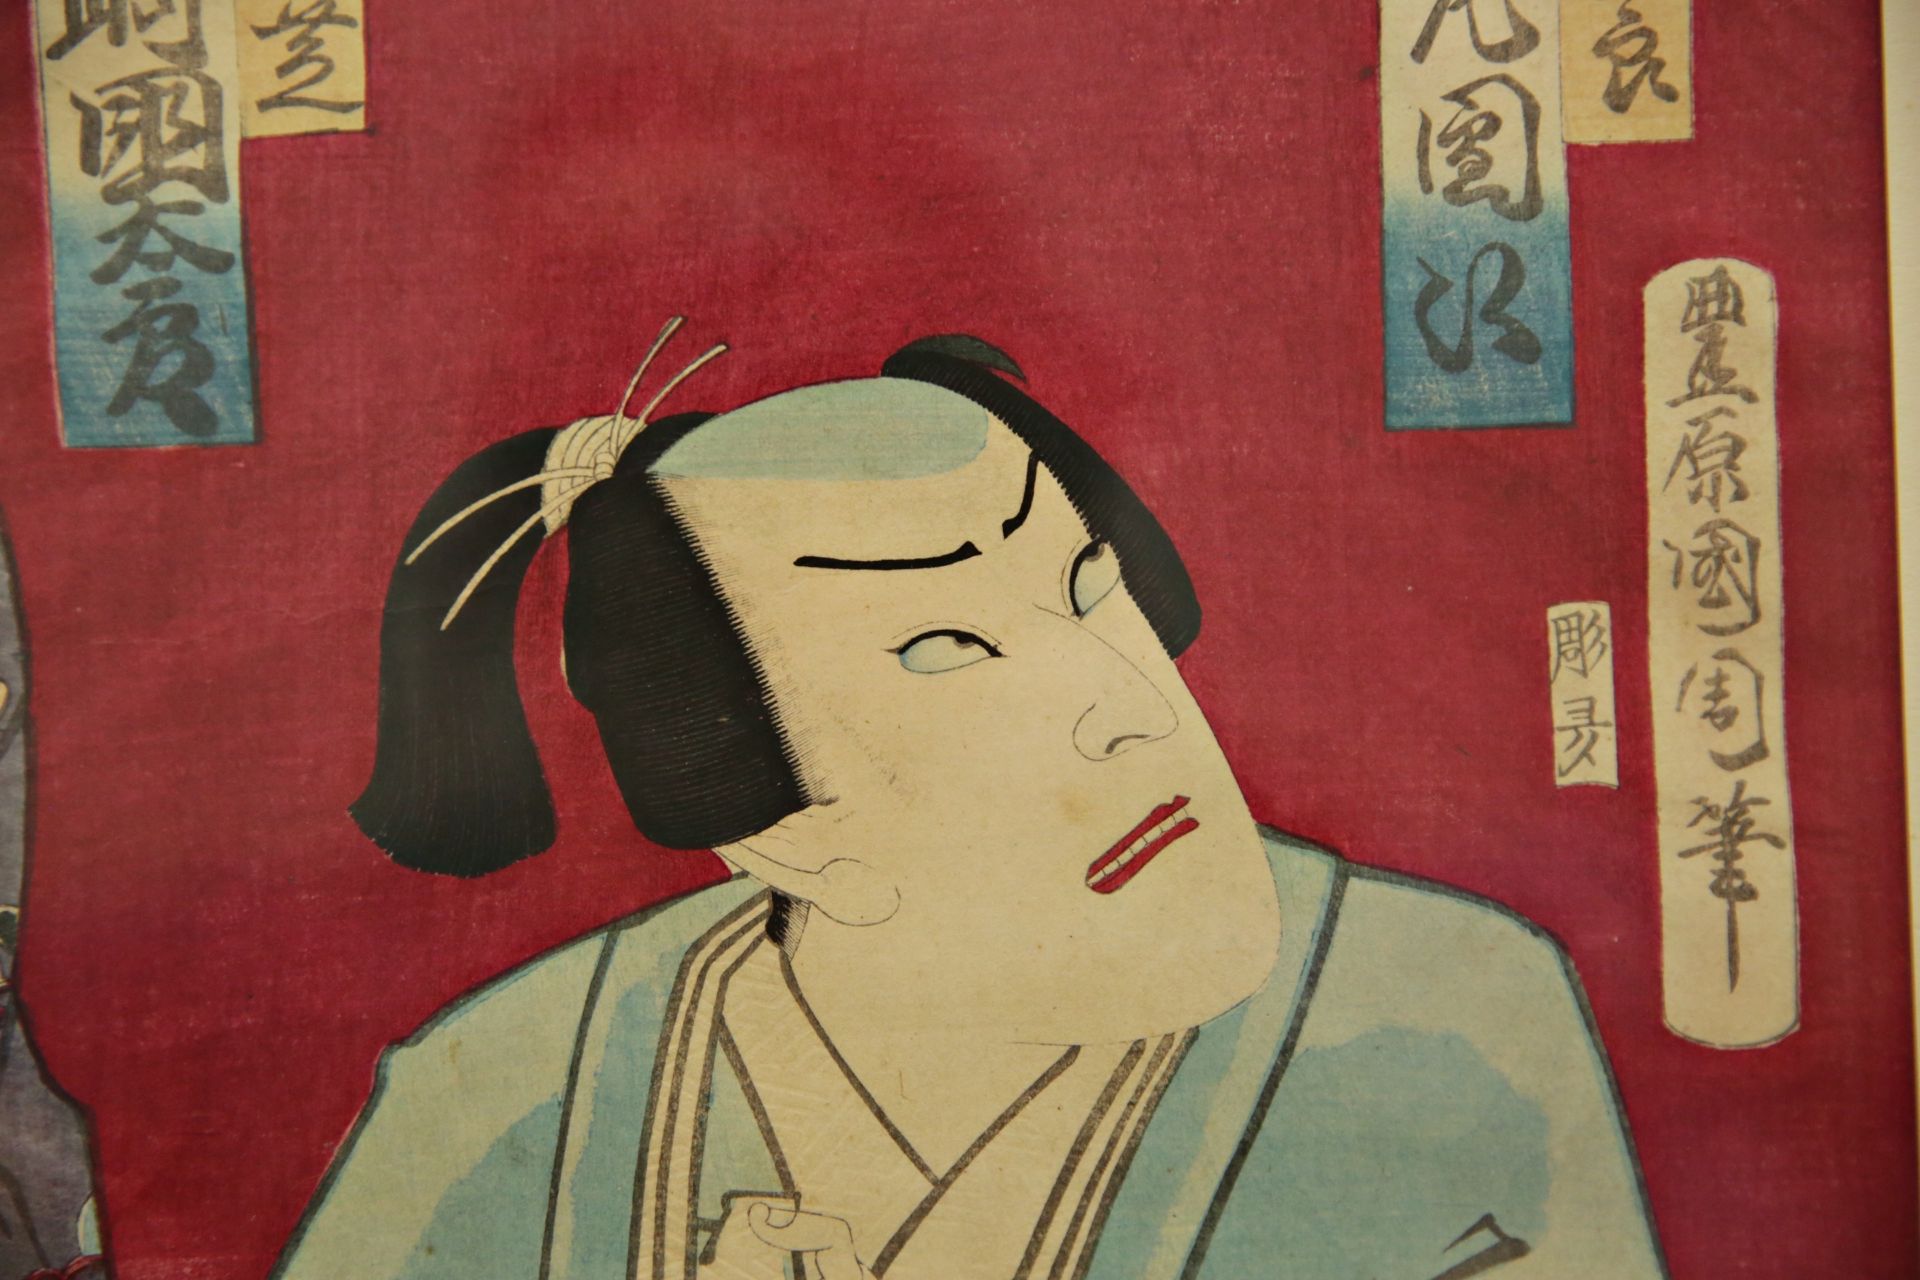 Antique Original Japanese Print, "Samurai" 19th _. Japanese art, Collectible art for home decor. - Image 4 of 4